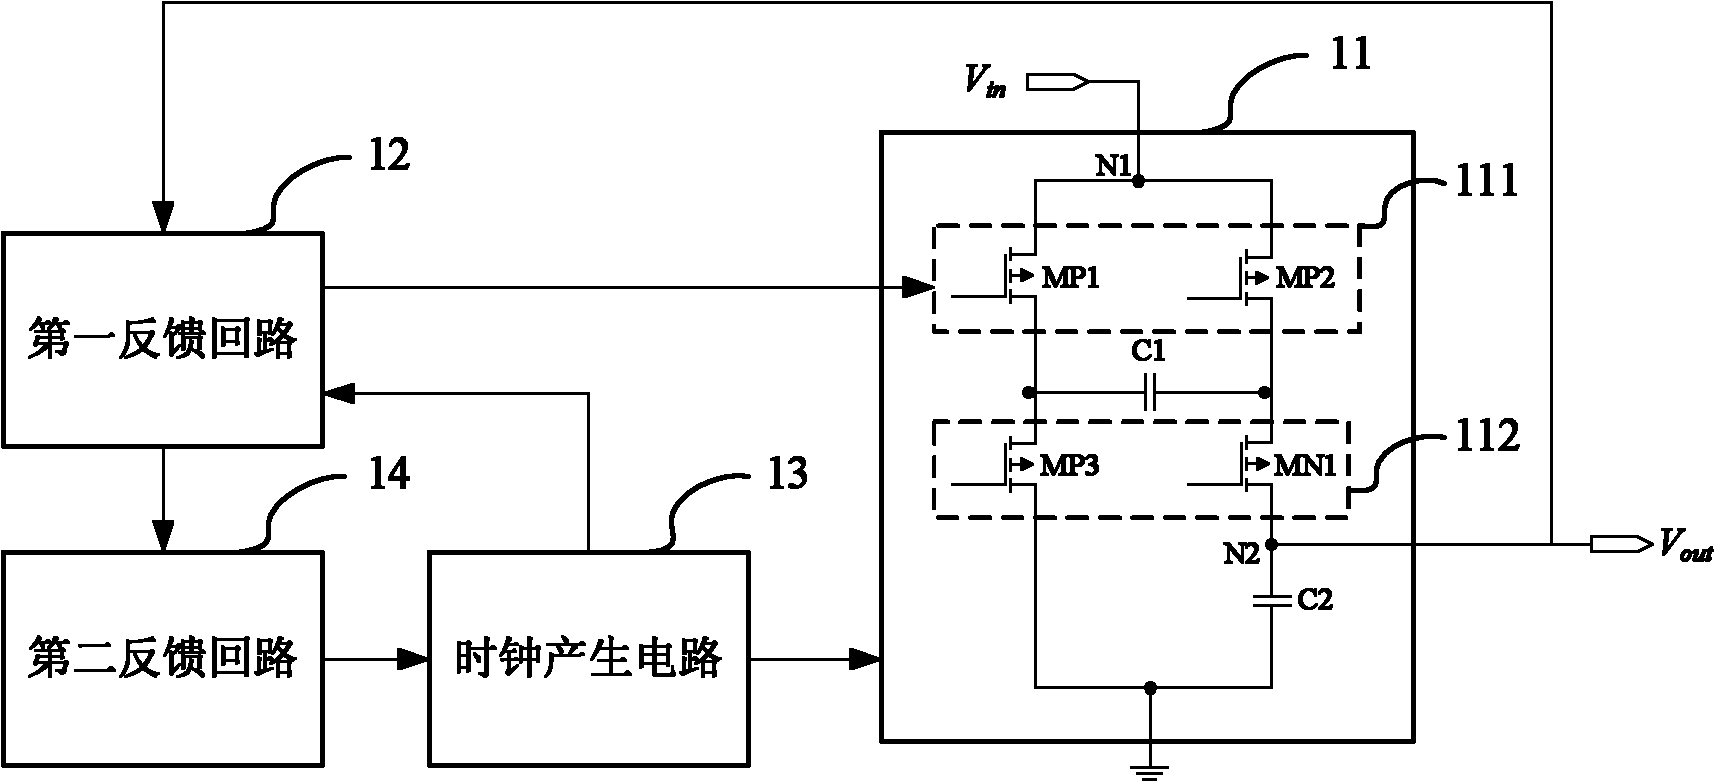 Constant voltage output charge pump circuit